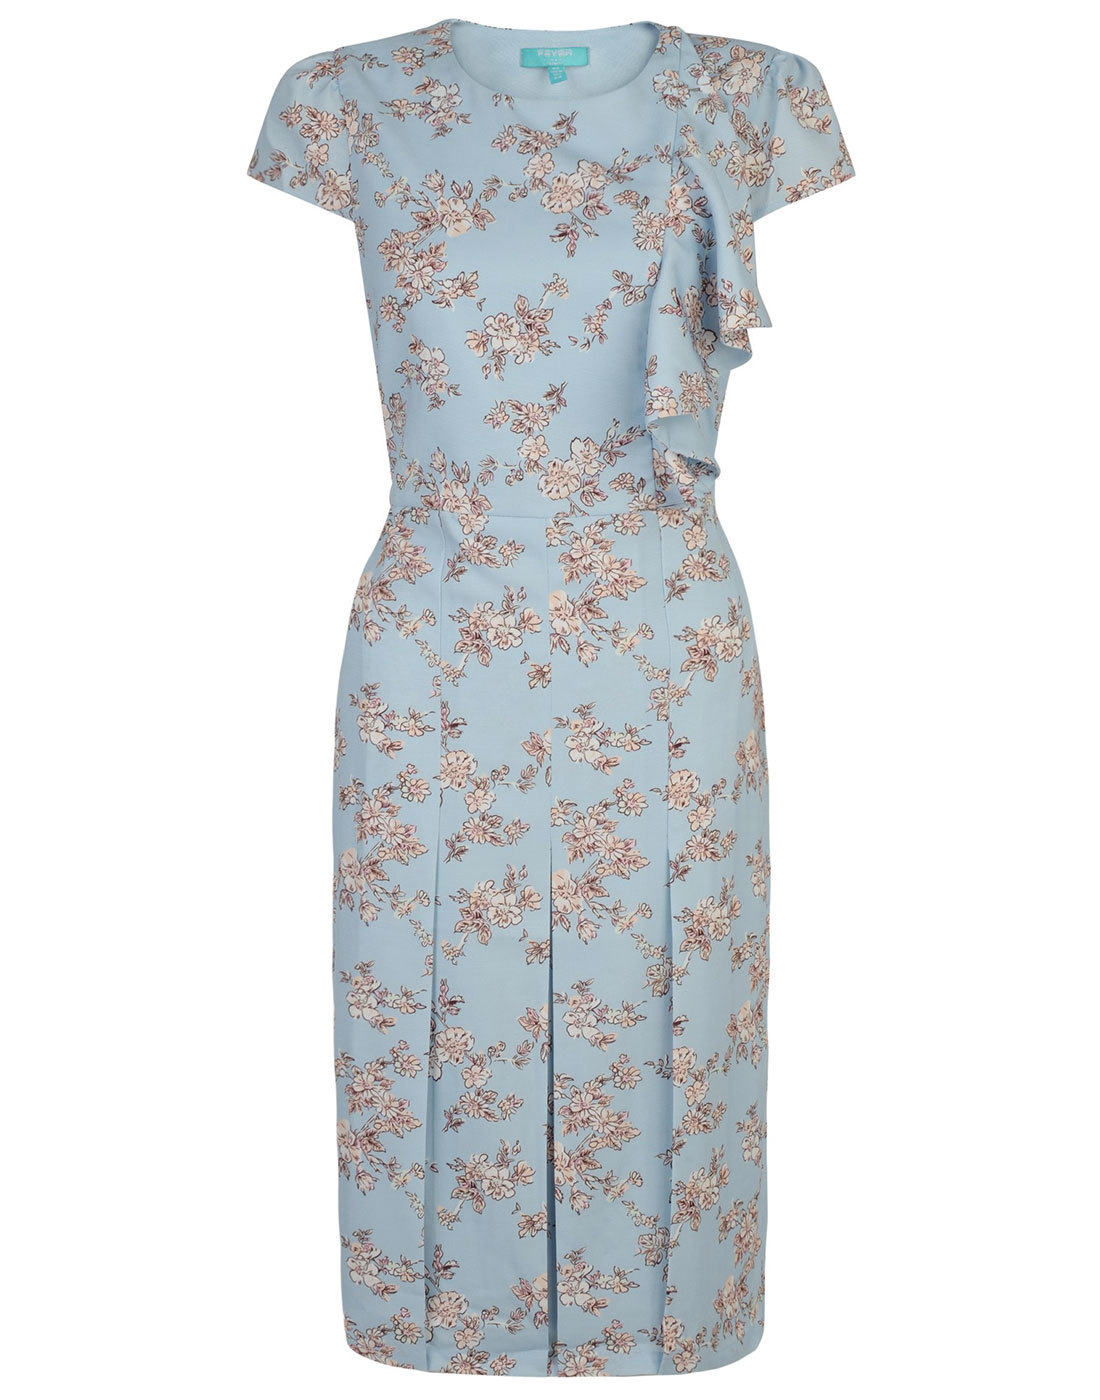 FEVER Megan Retro 1950s Vintage Floral Ruffle Dress in Light Blue